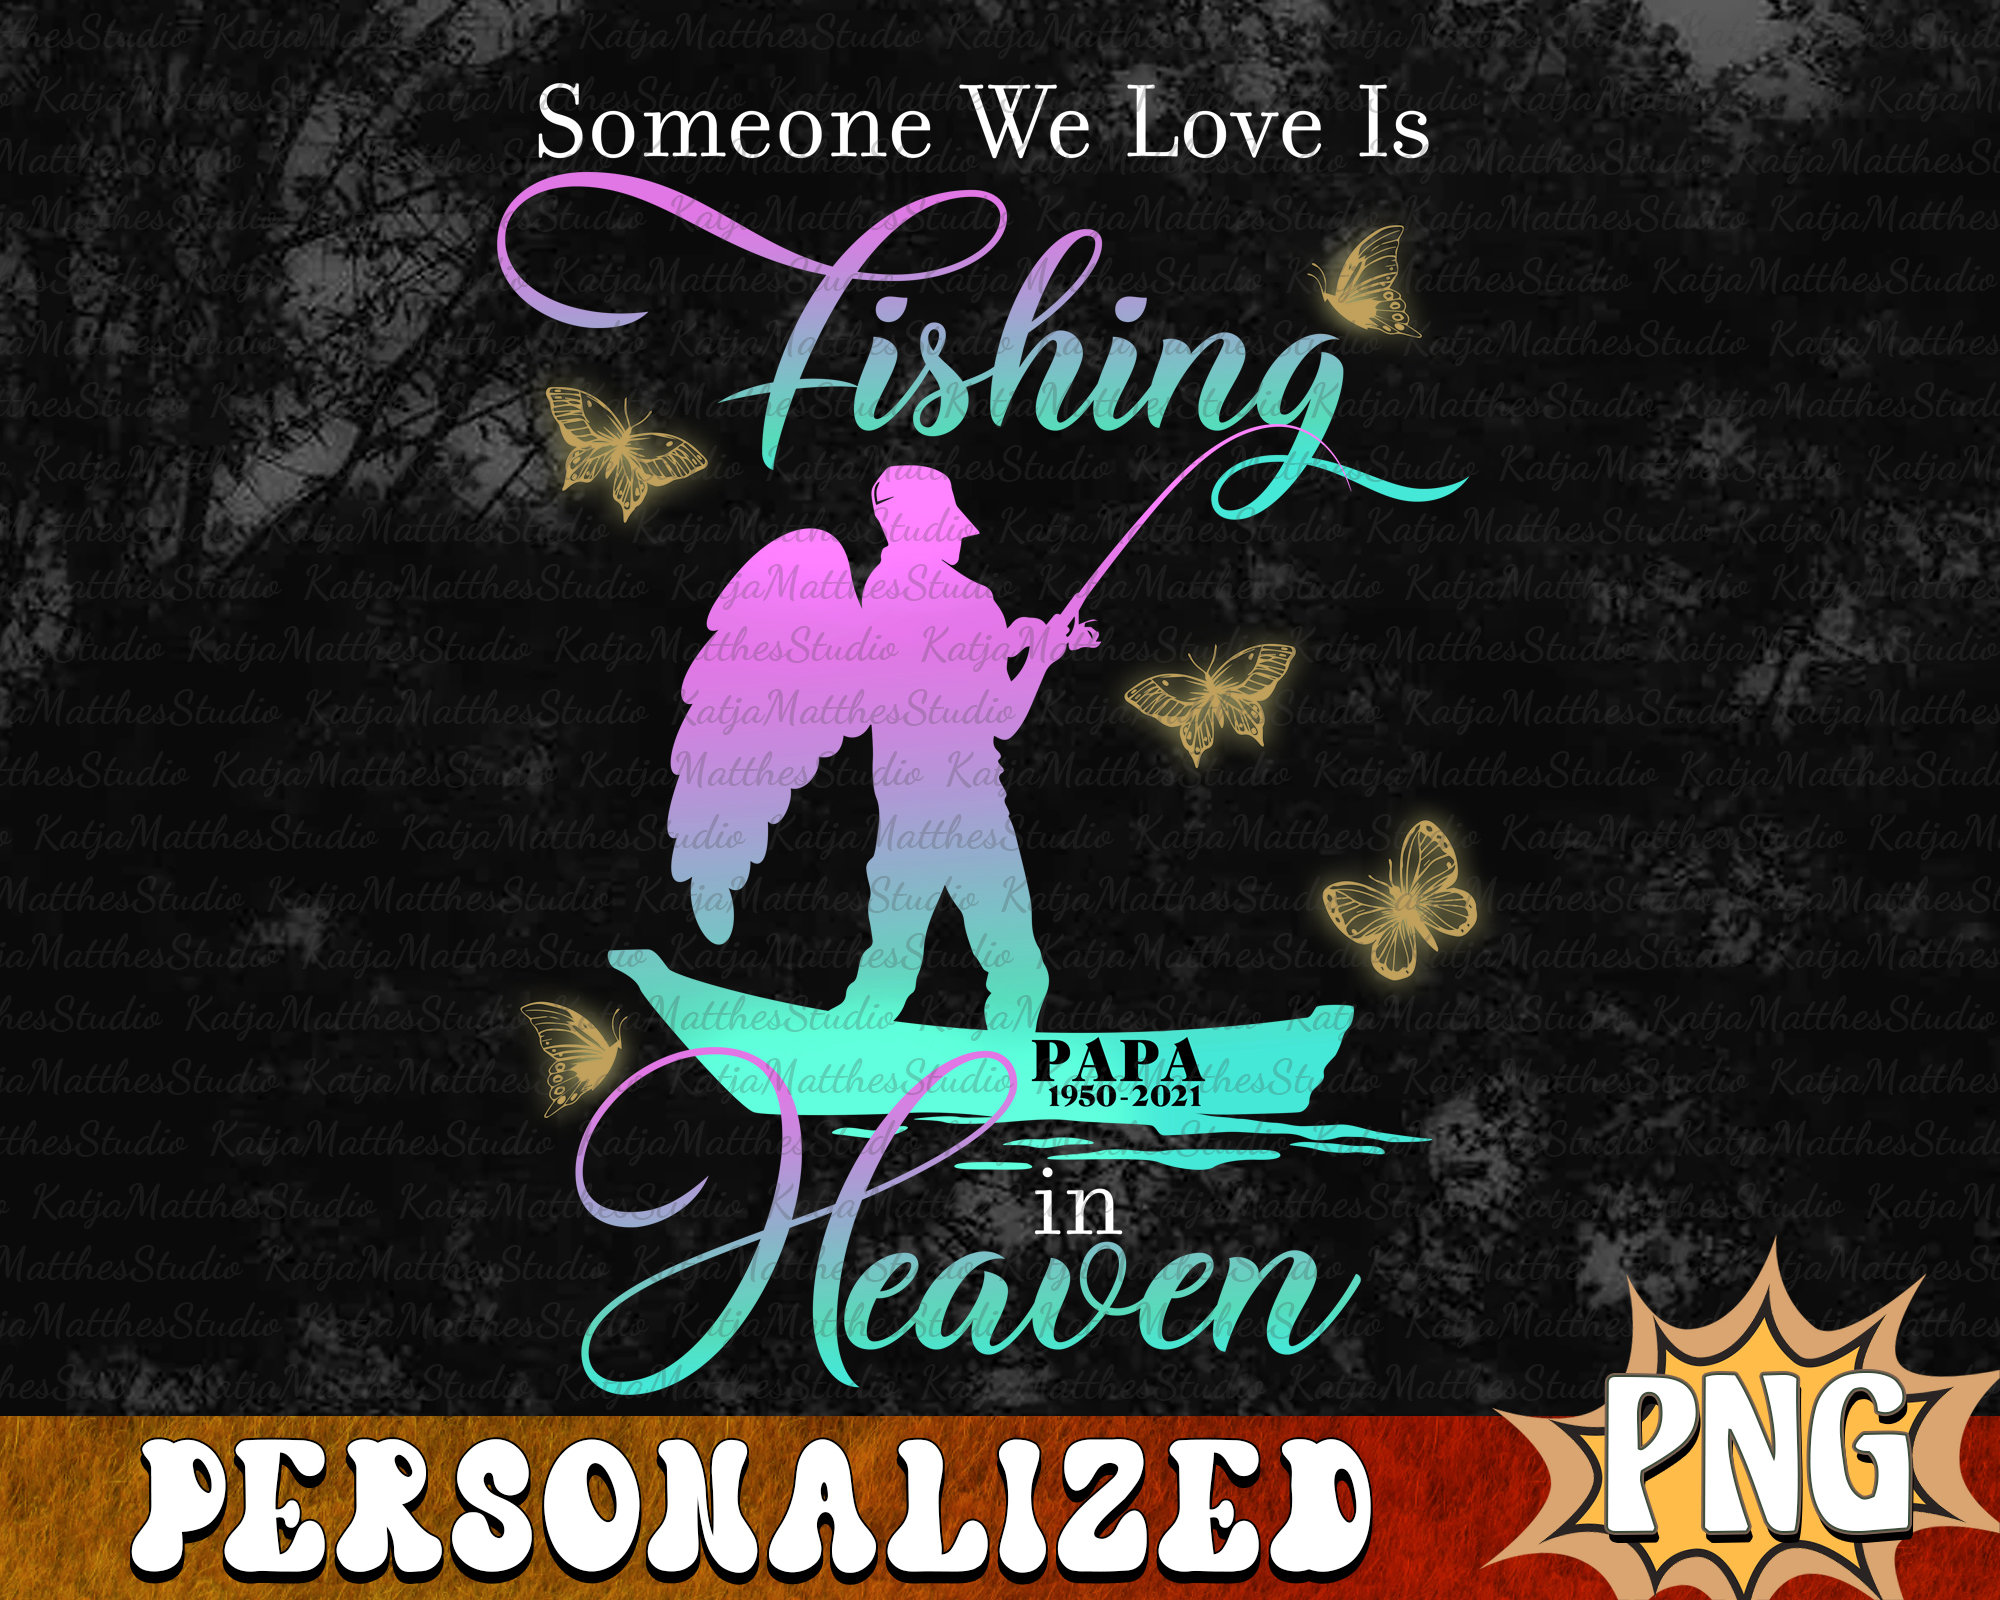 Someone I Love Is Fishing in Heaven Memorial Ornament — Simple & Sentimental